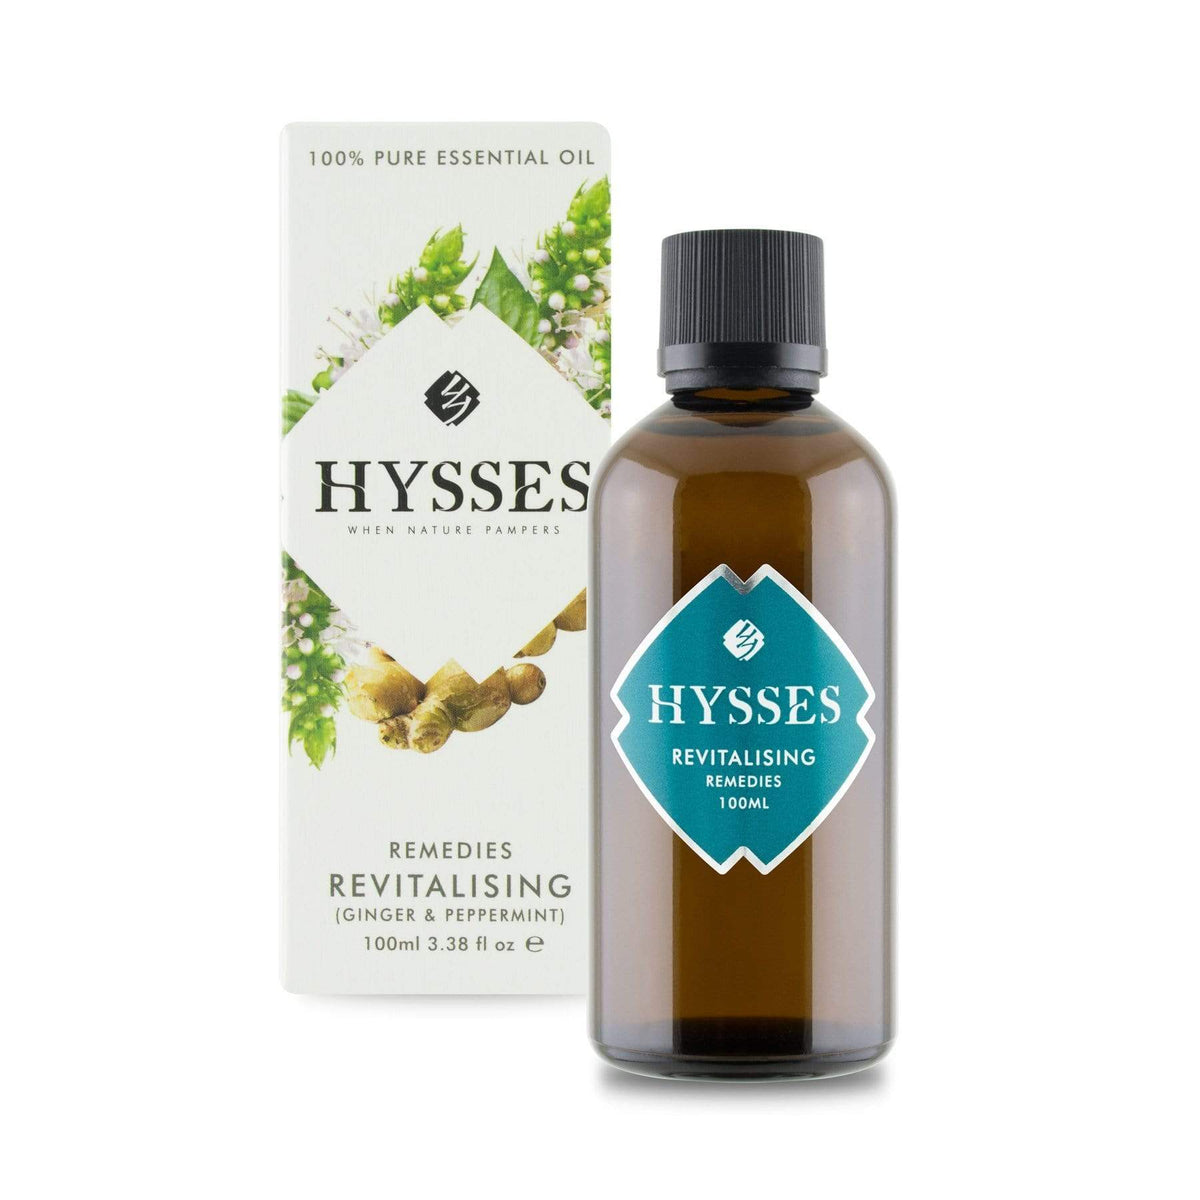 Hysses Essential Oil 100ml Remedies, Revitalising